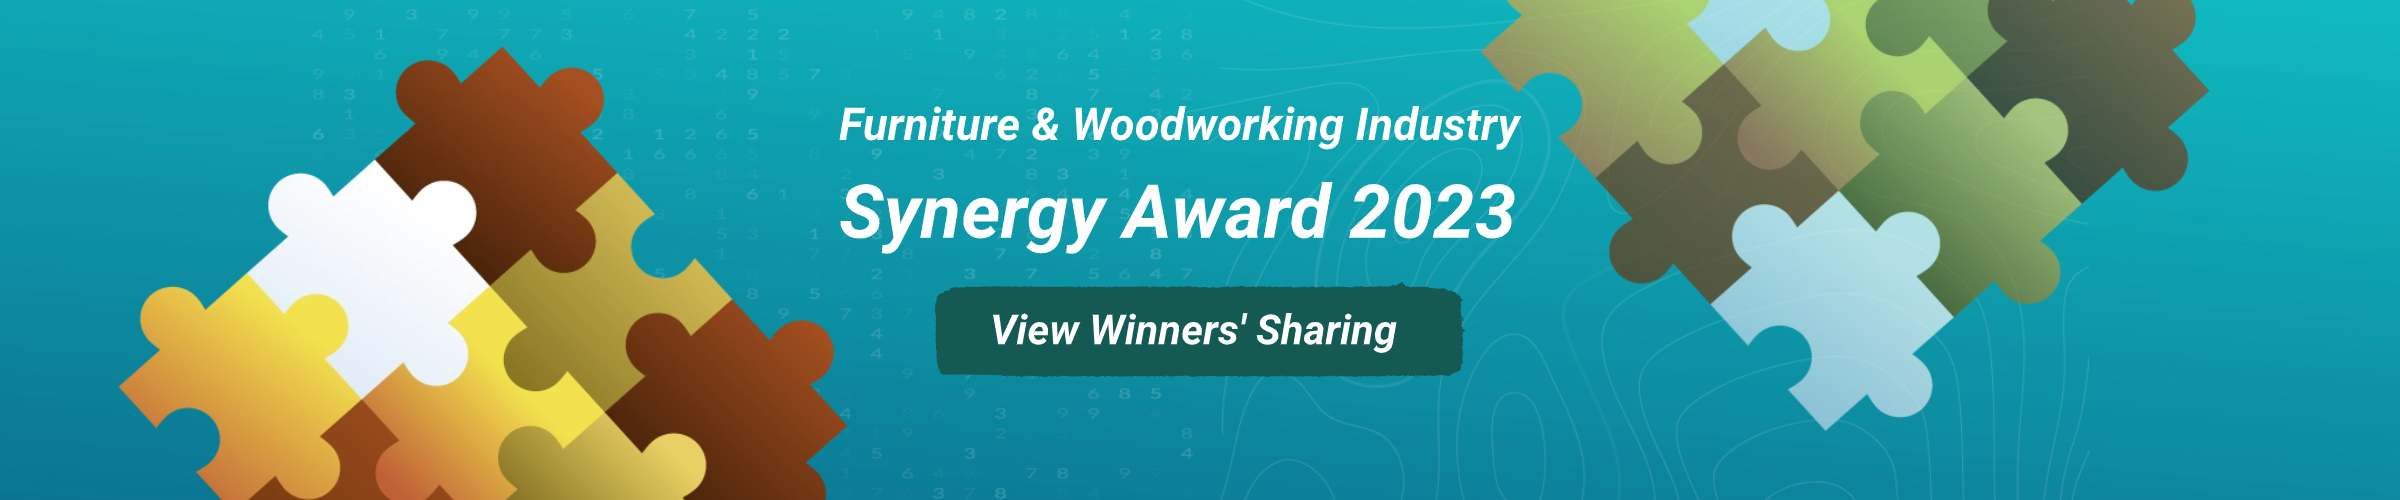 Synergy Award 2023 Winners’ Sharing